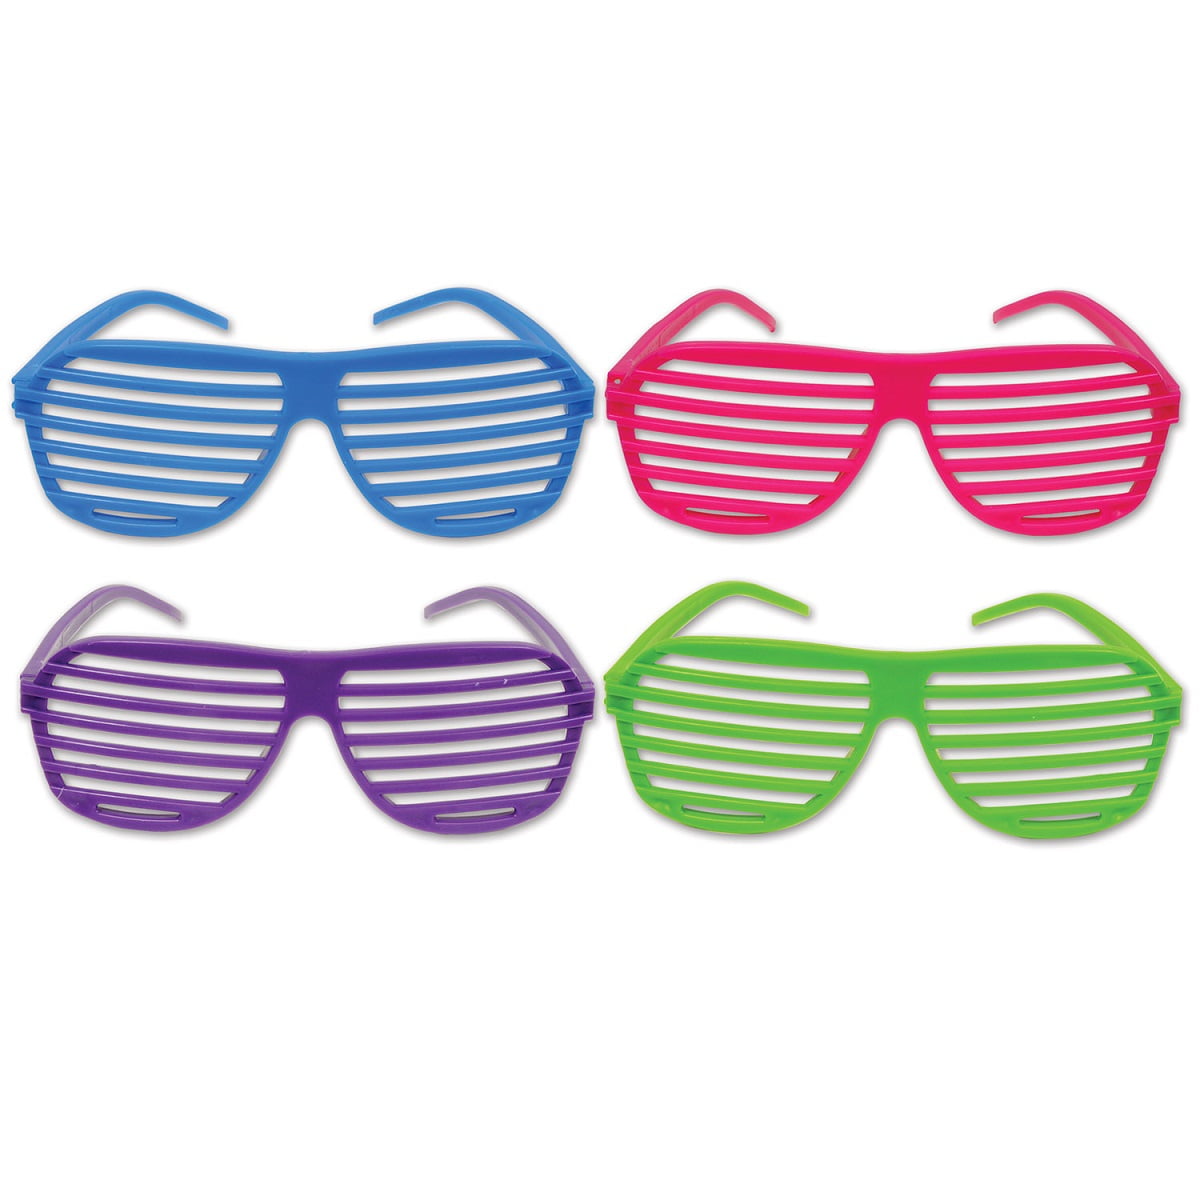 New Full Shutter Blue Glasses Shades Sunglasses Club Party 